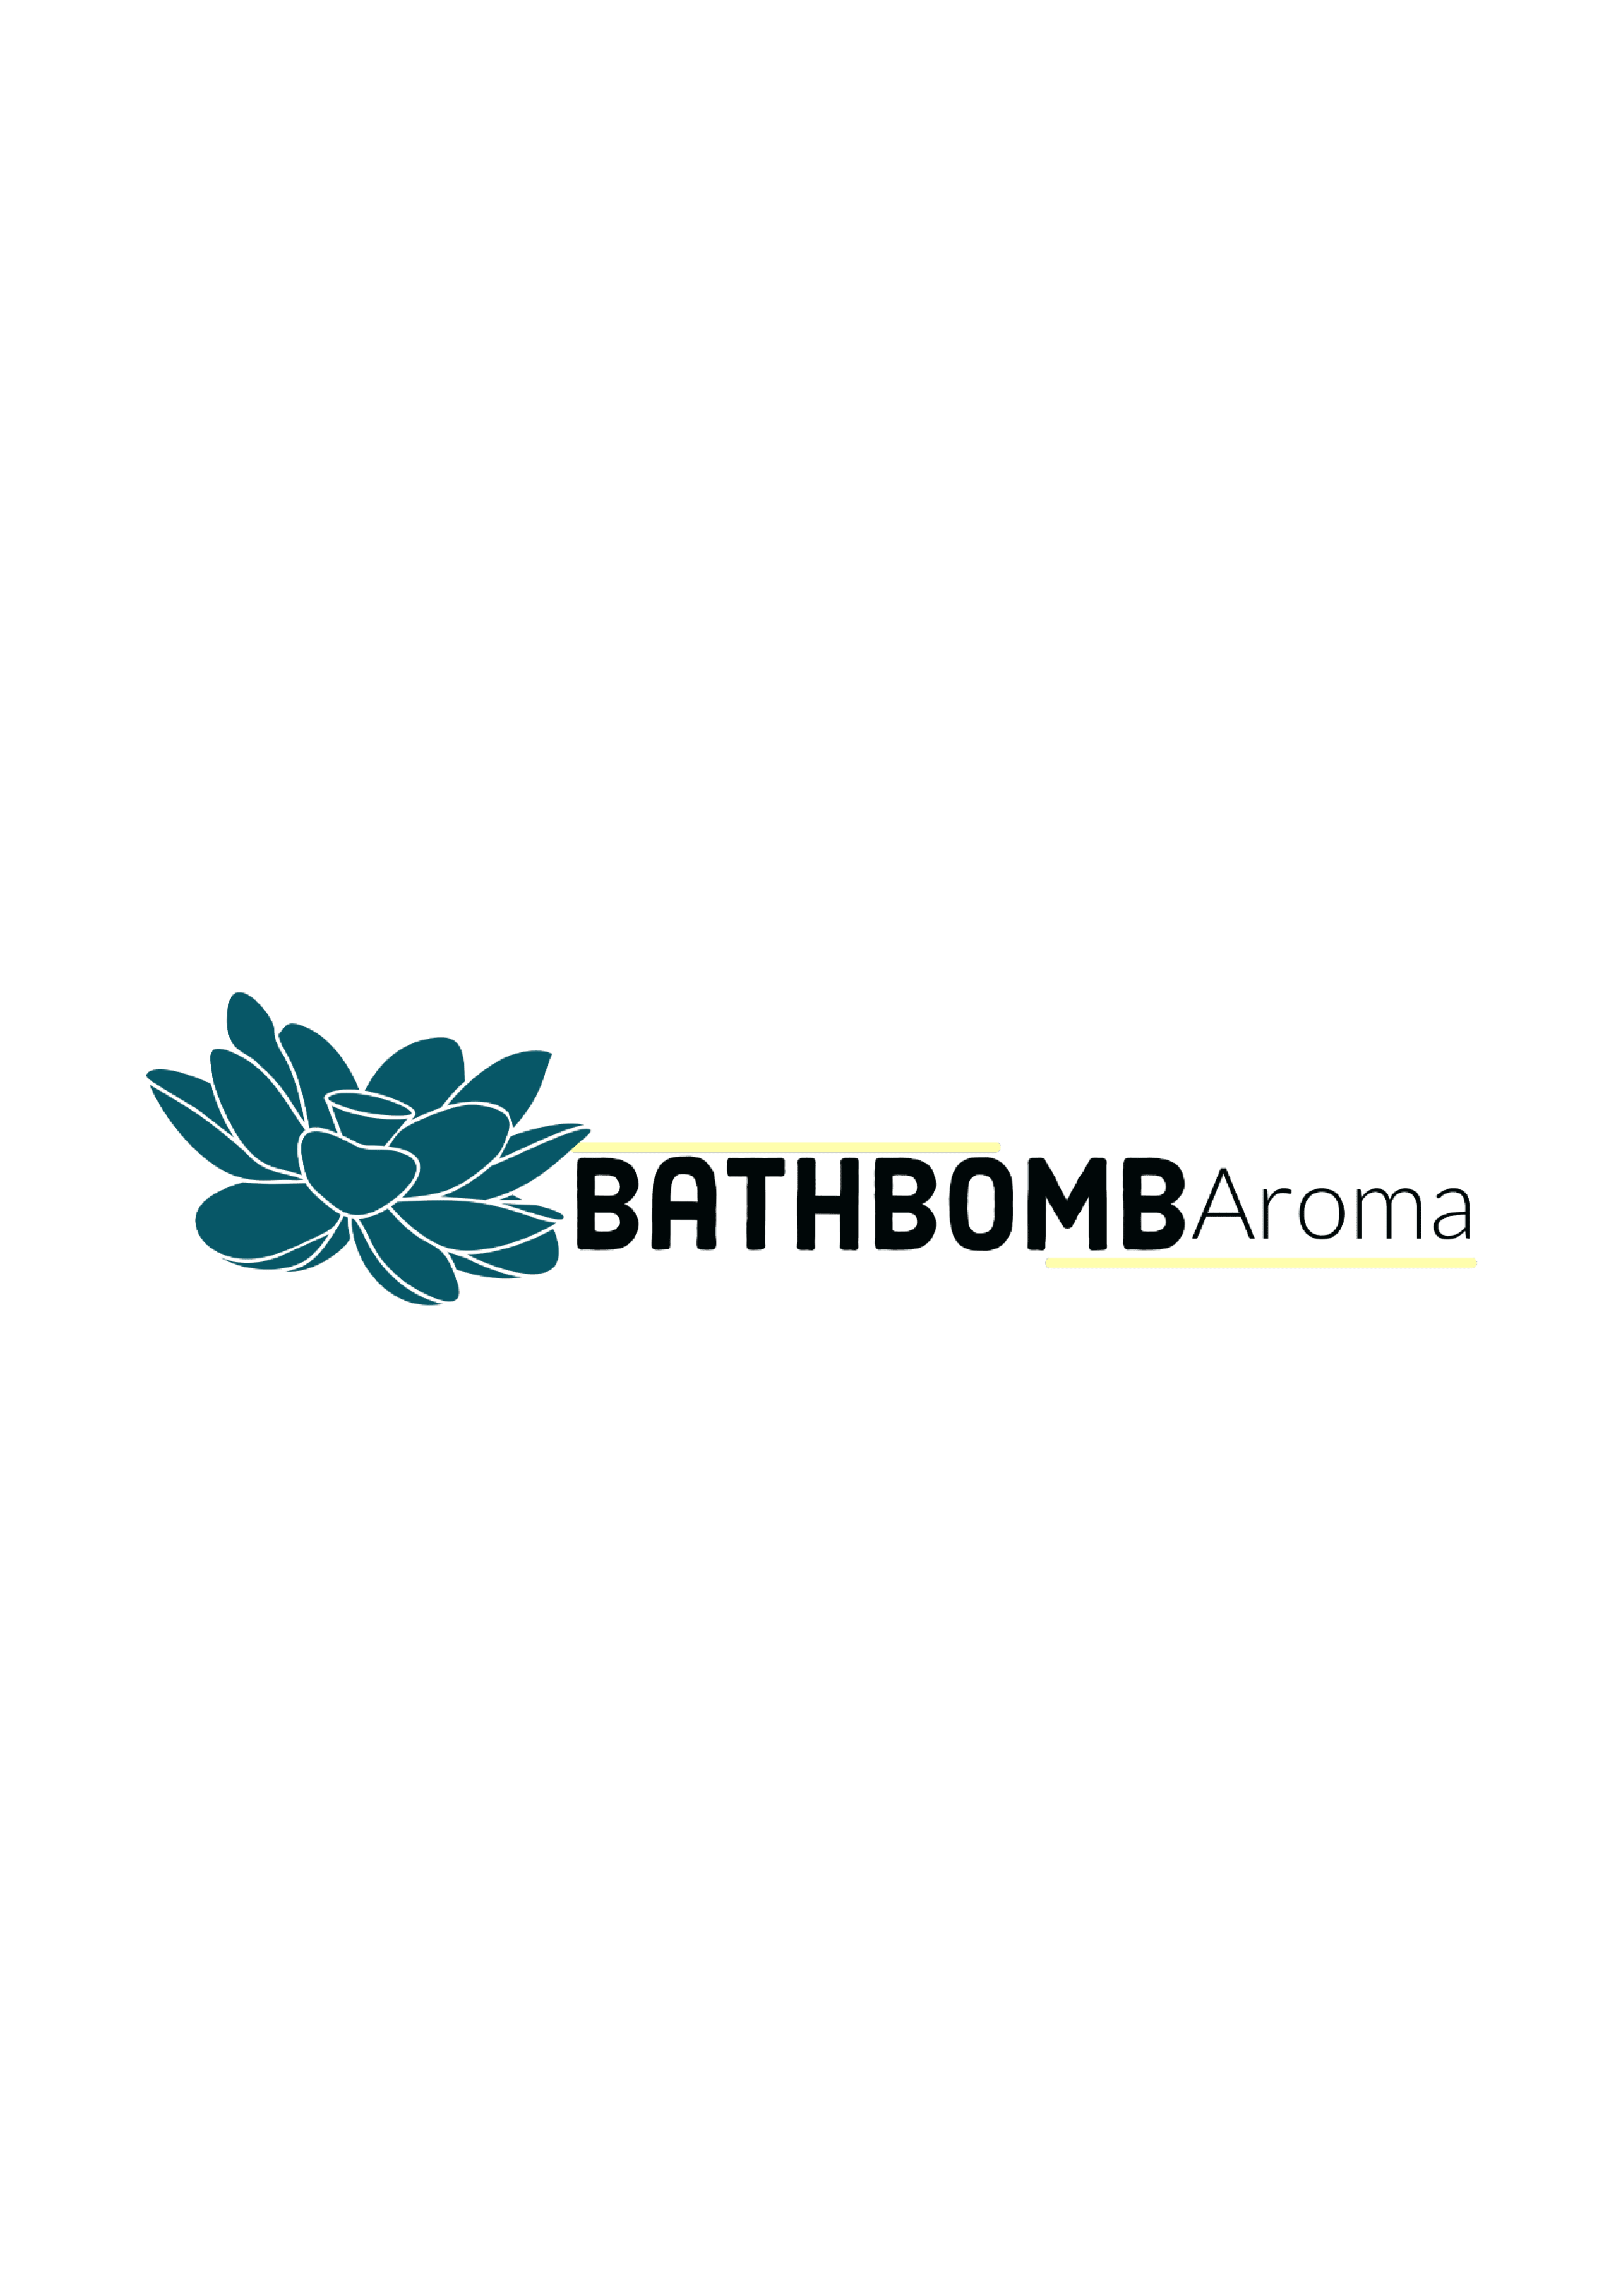 Bath Bomb Aroma